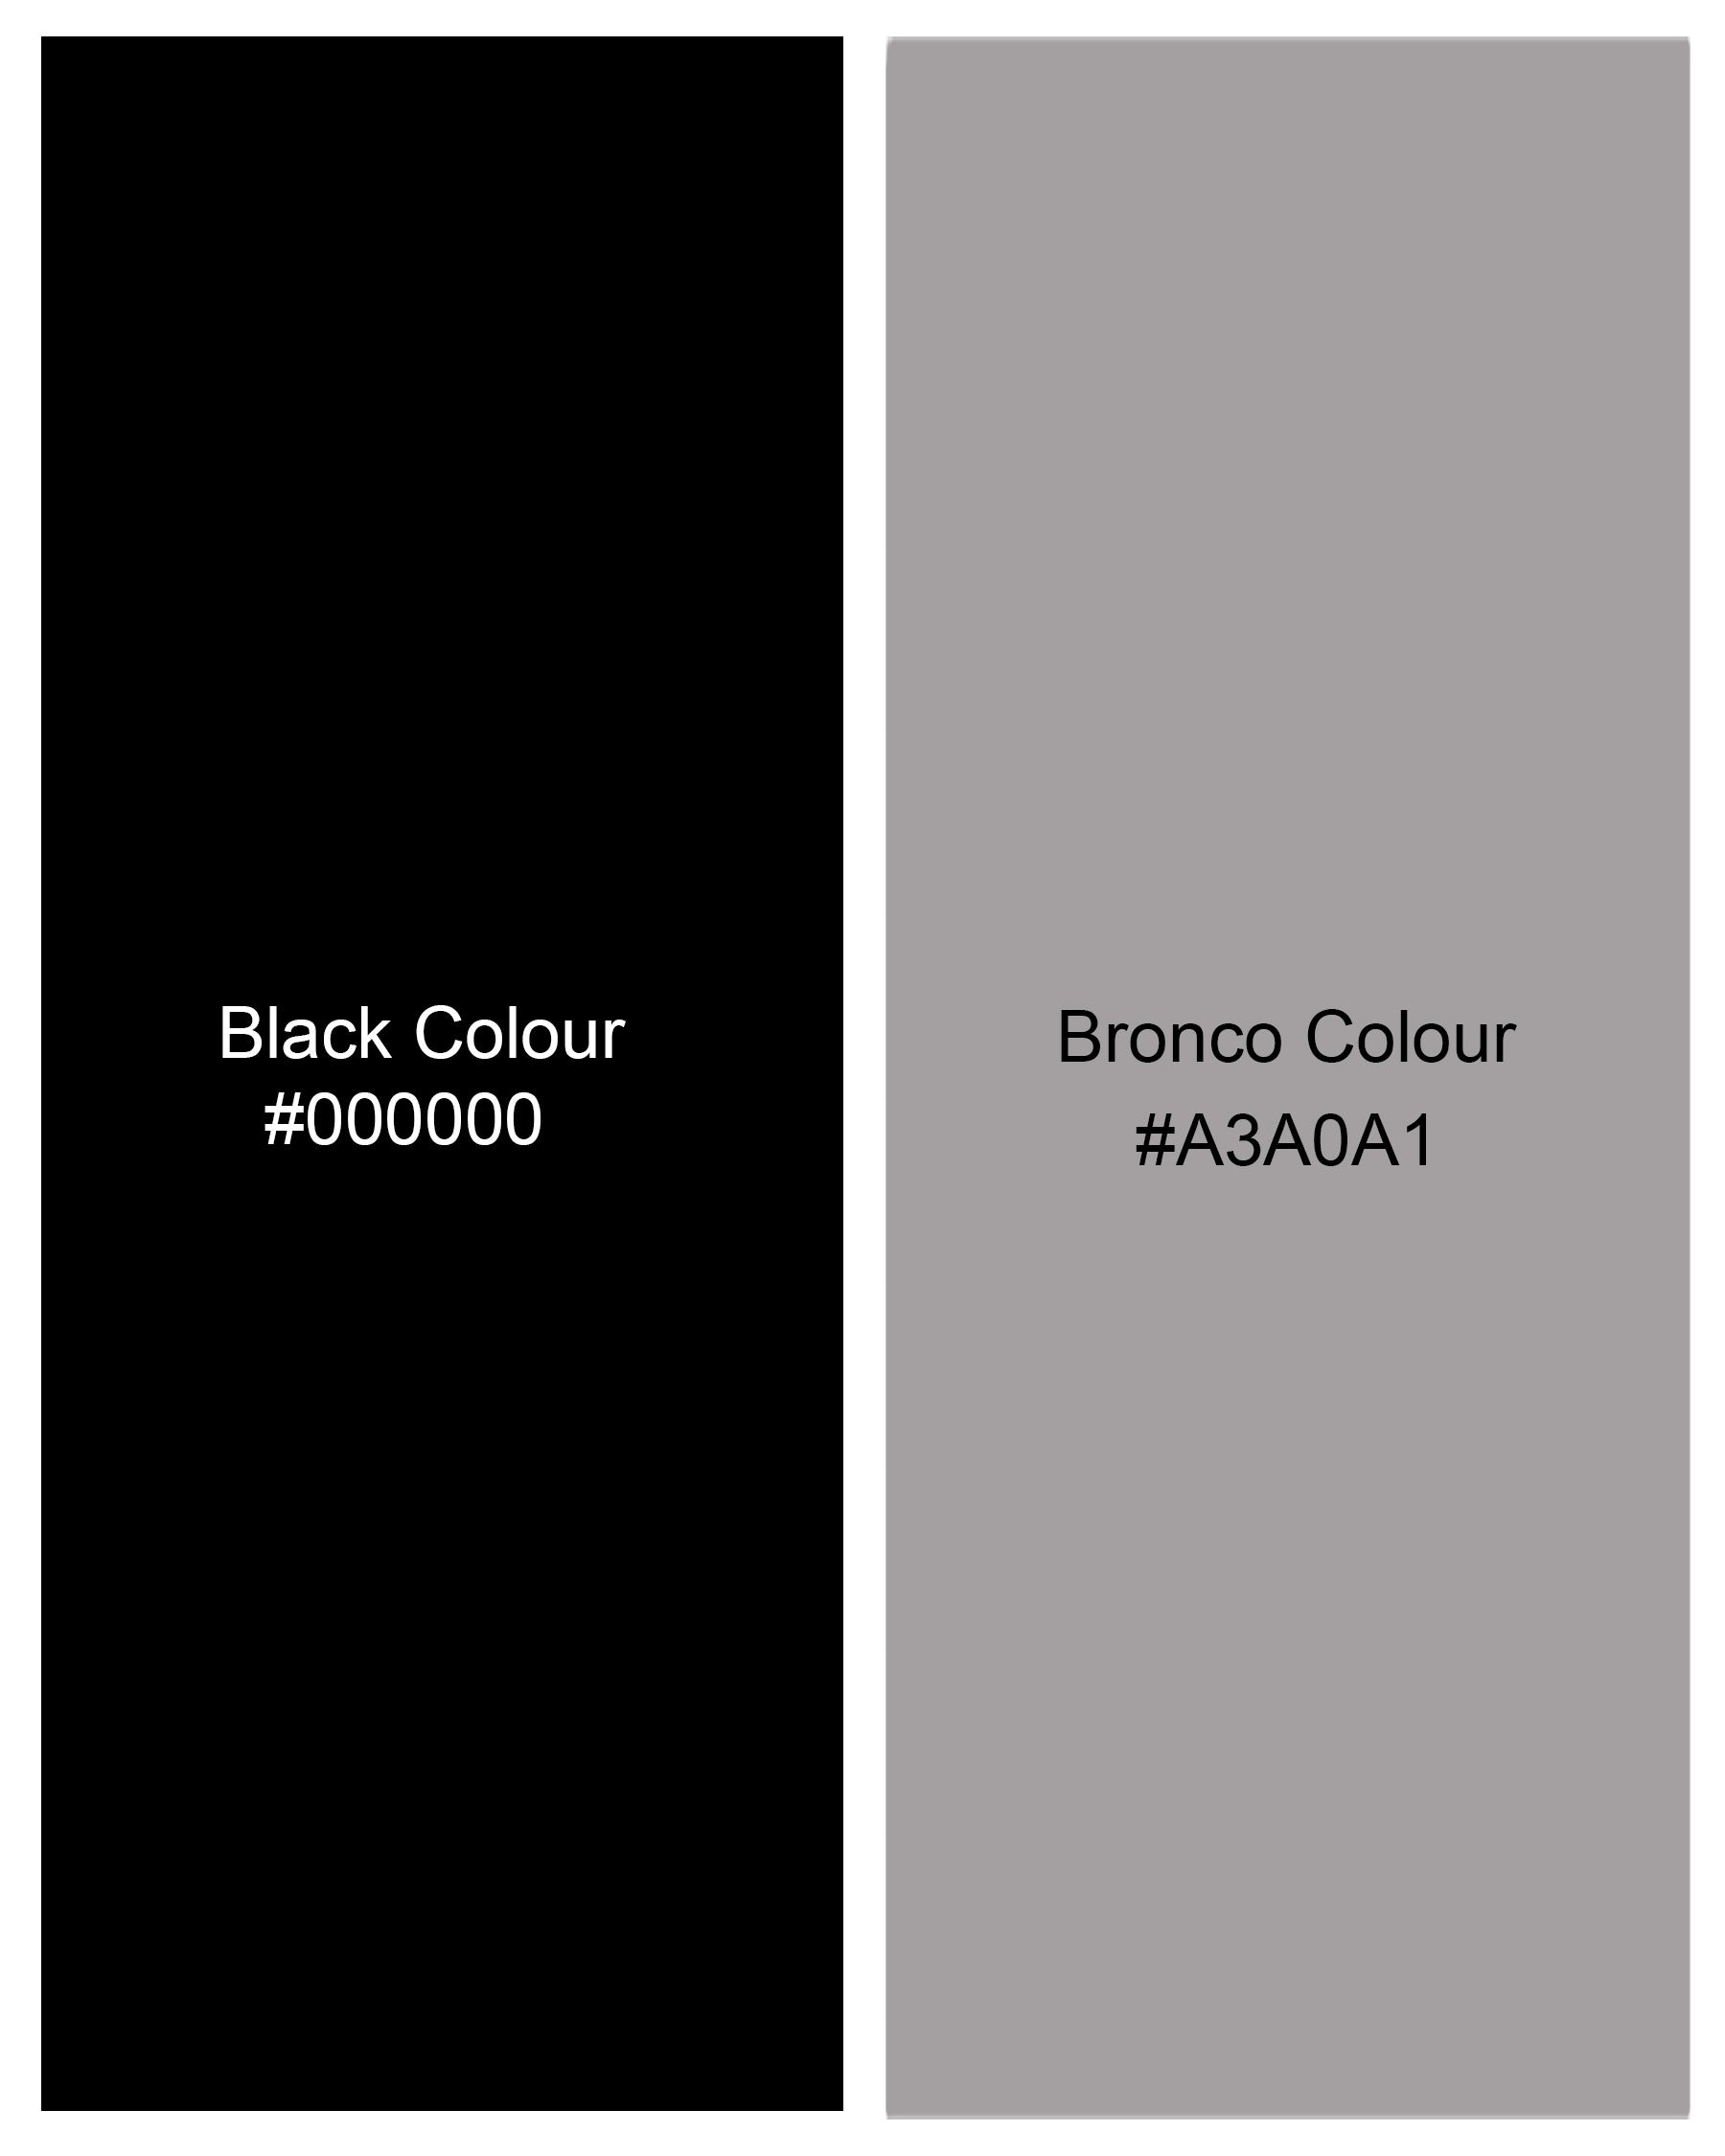 Jade Black with Bronco Gray Twill Checked Premium Cotton Shirt 8357-BD-BLK-38, 8357-BD-BLK-H-38, 8357-BD-BLK-39, 8357-BD-BLK-H-39, 8357-BD-BLK-40, 8357-BD-BLK-H-40, 8357-BD-BLK-42, 8357-BD-BLK-H-42, 8357-BD-BLK-44, 8357-BD-BLK-H-44, 8357-BD-BLK-46, 8357-BD-BLK-H-46, 8357-BD-BLK-48, 8357-BD-BLK-H-48, 8357-BD-BLK-50, 8357-BD-BLK-H-50, 8357-BD-BLK-52, 8357-BD-BLK-H-52